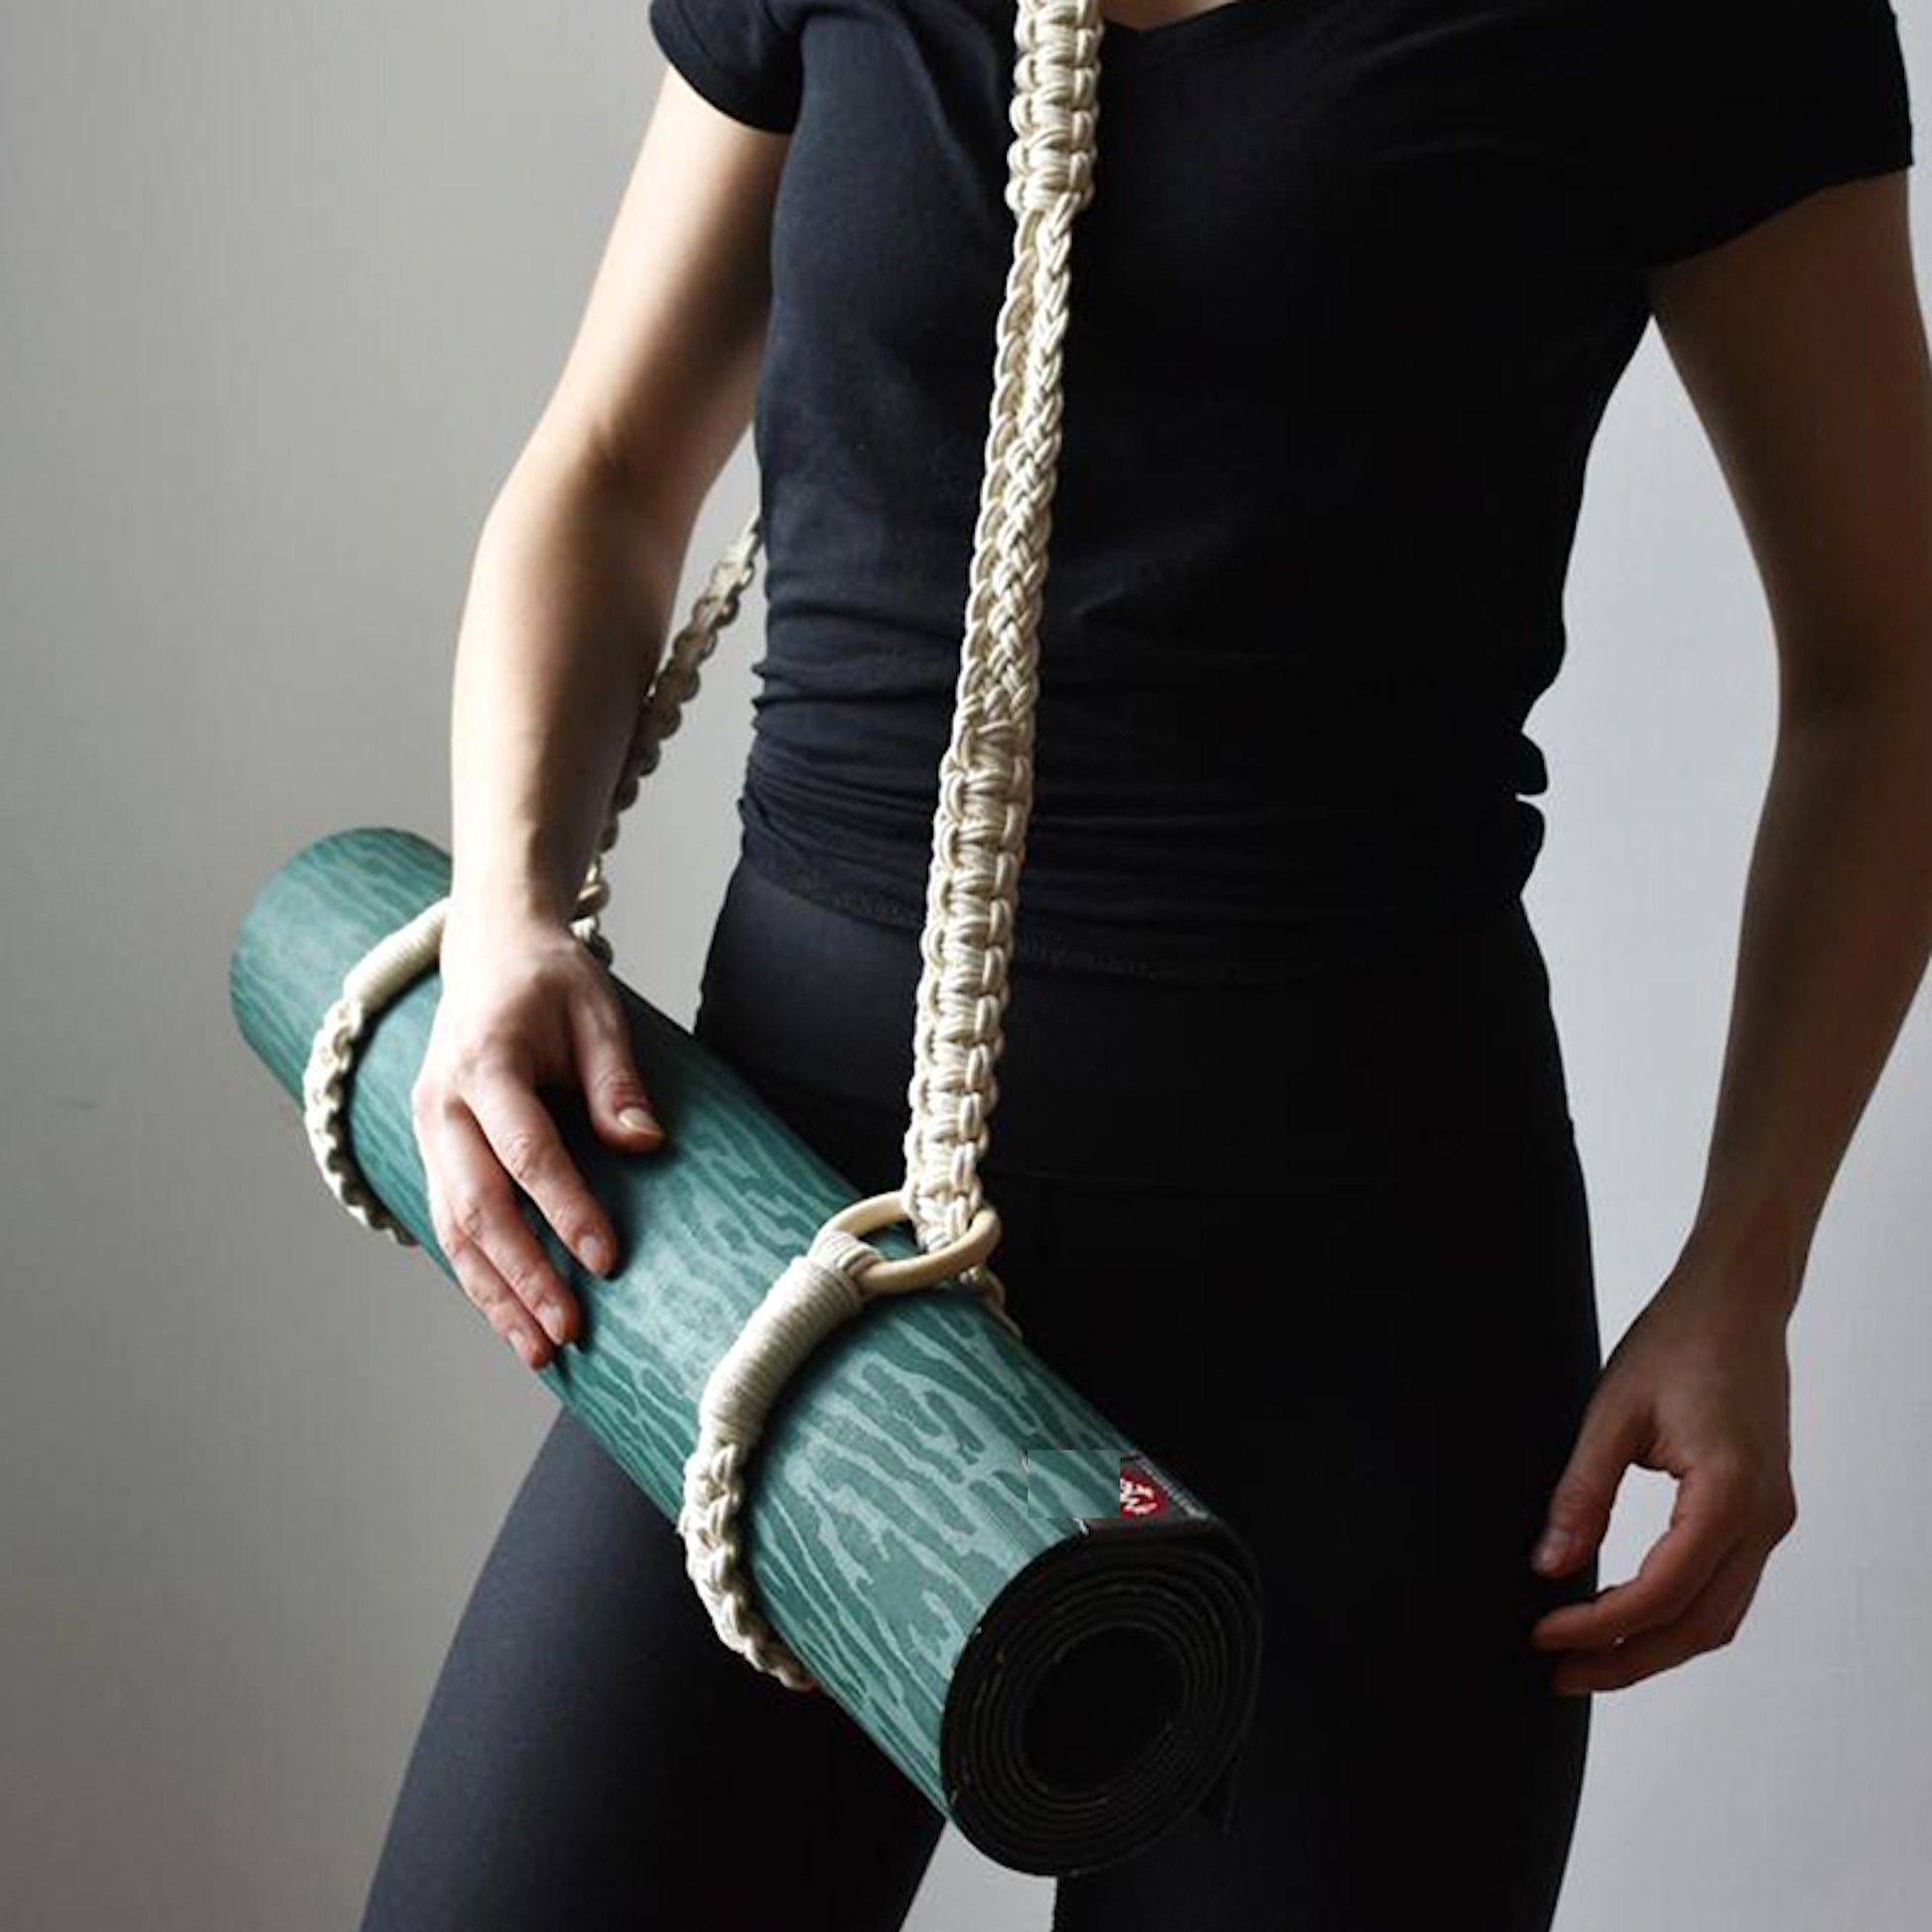 Yoga Mat Holder Handmade Cotton Macrame – Indigo Paisley